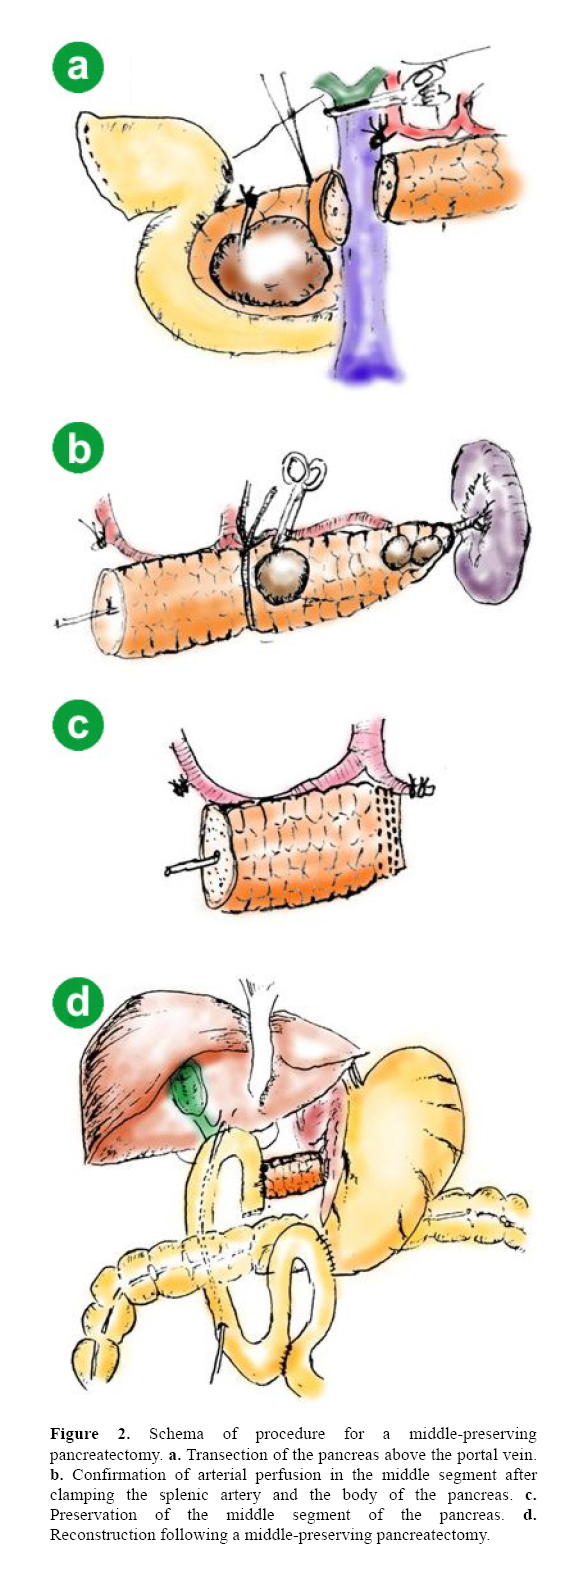 pancreas-procedure-middle-preserving